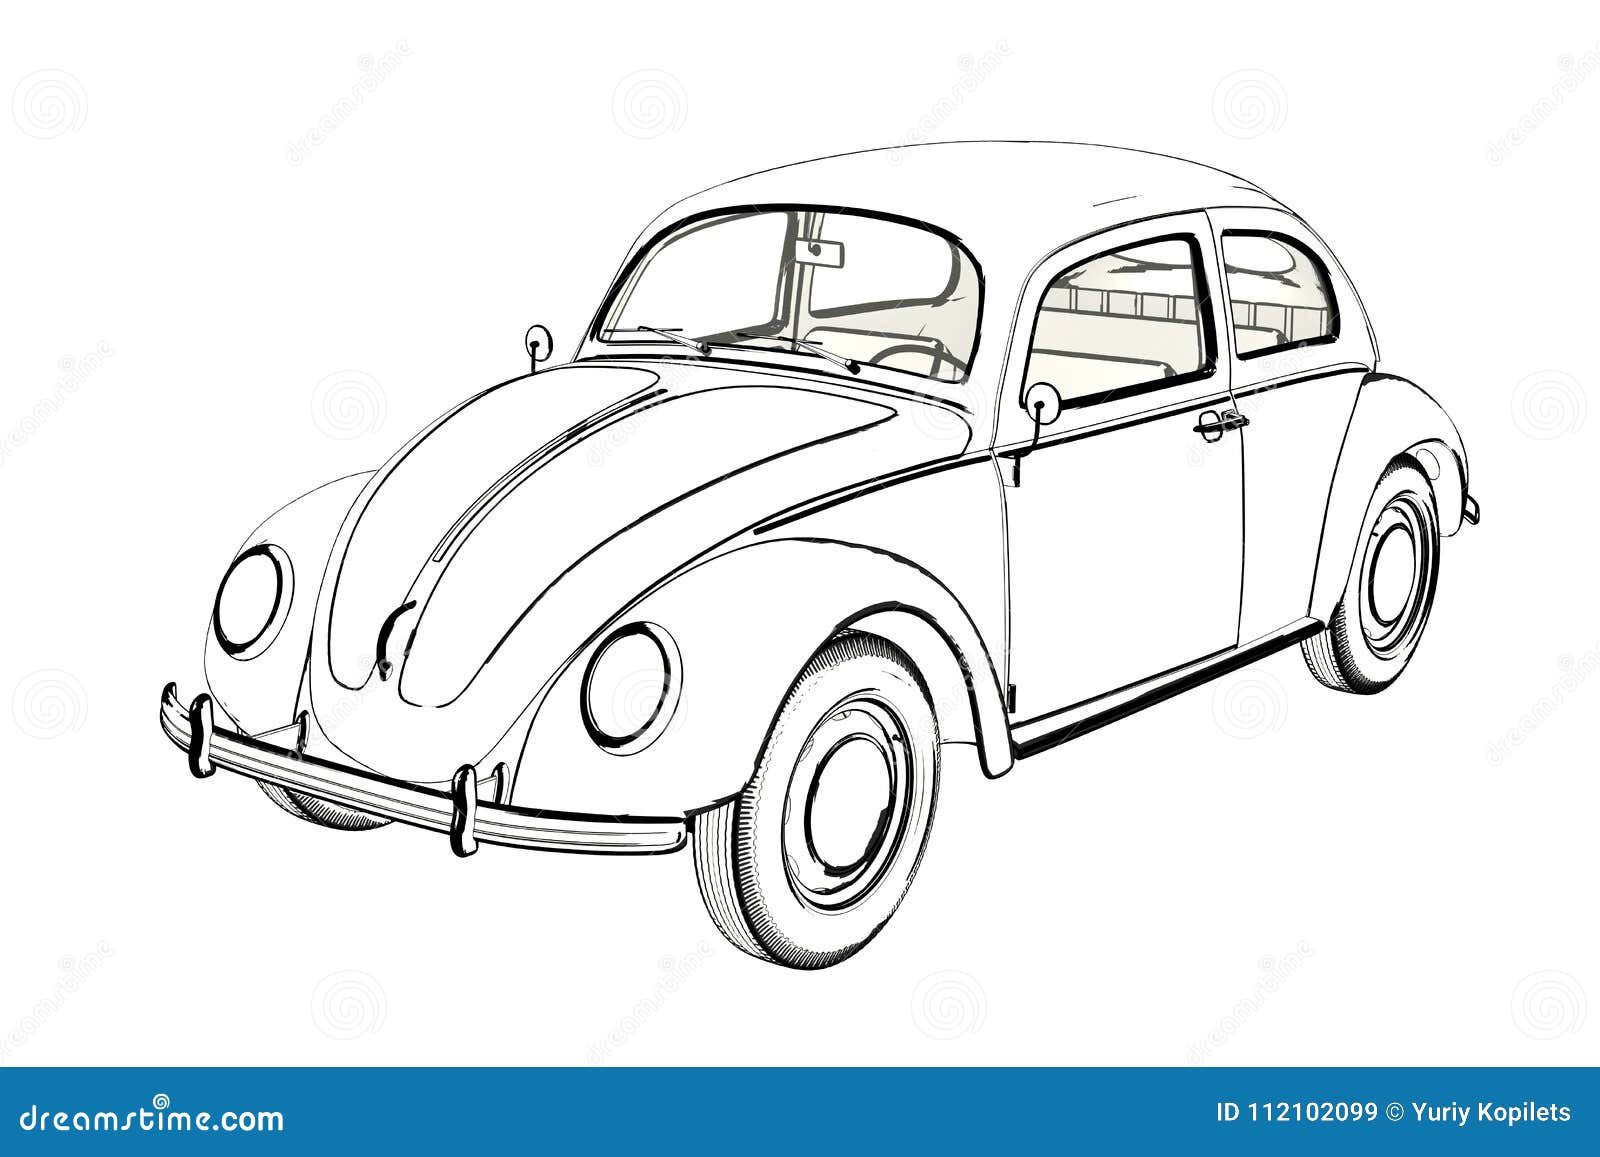 Sprot Car Wolksvagen Beetle Sketch. 3D Illustration. Stock ...